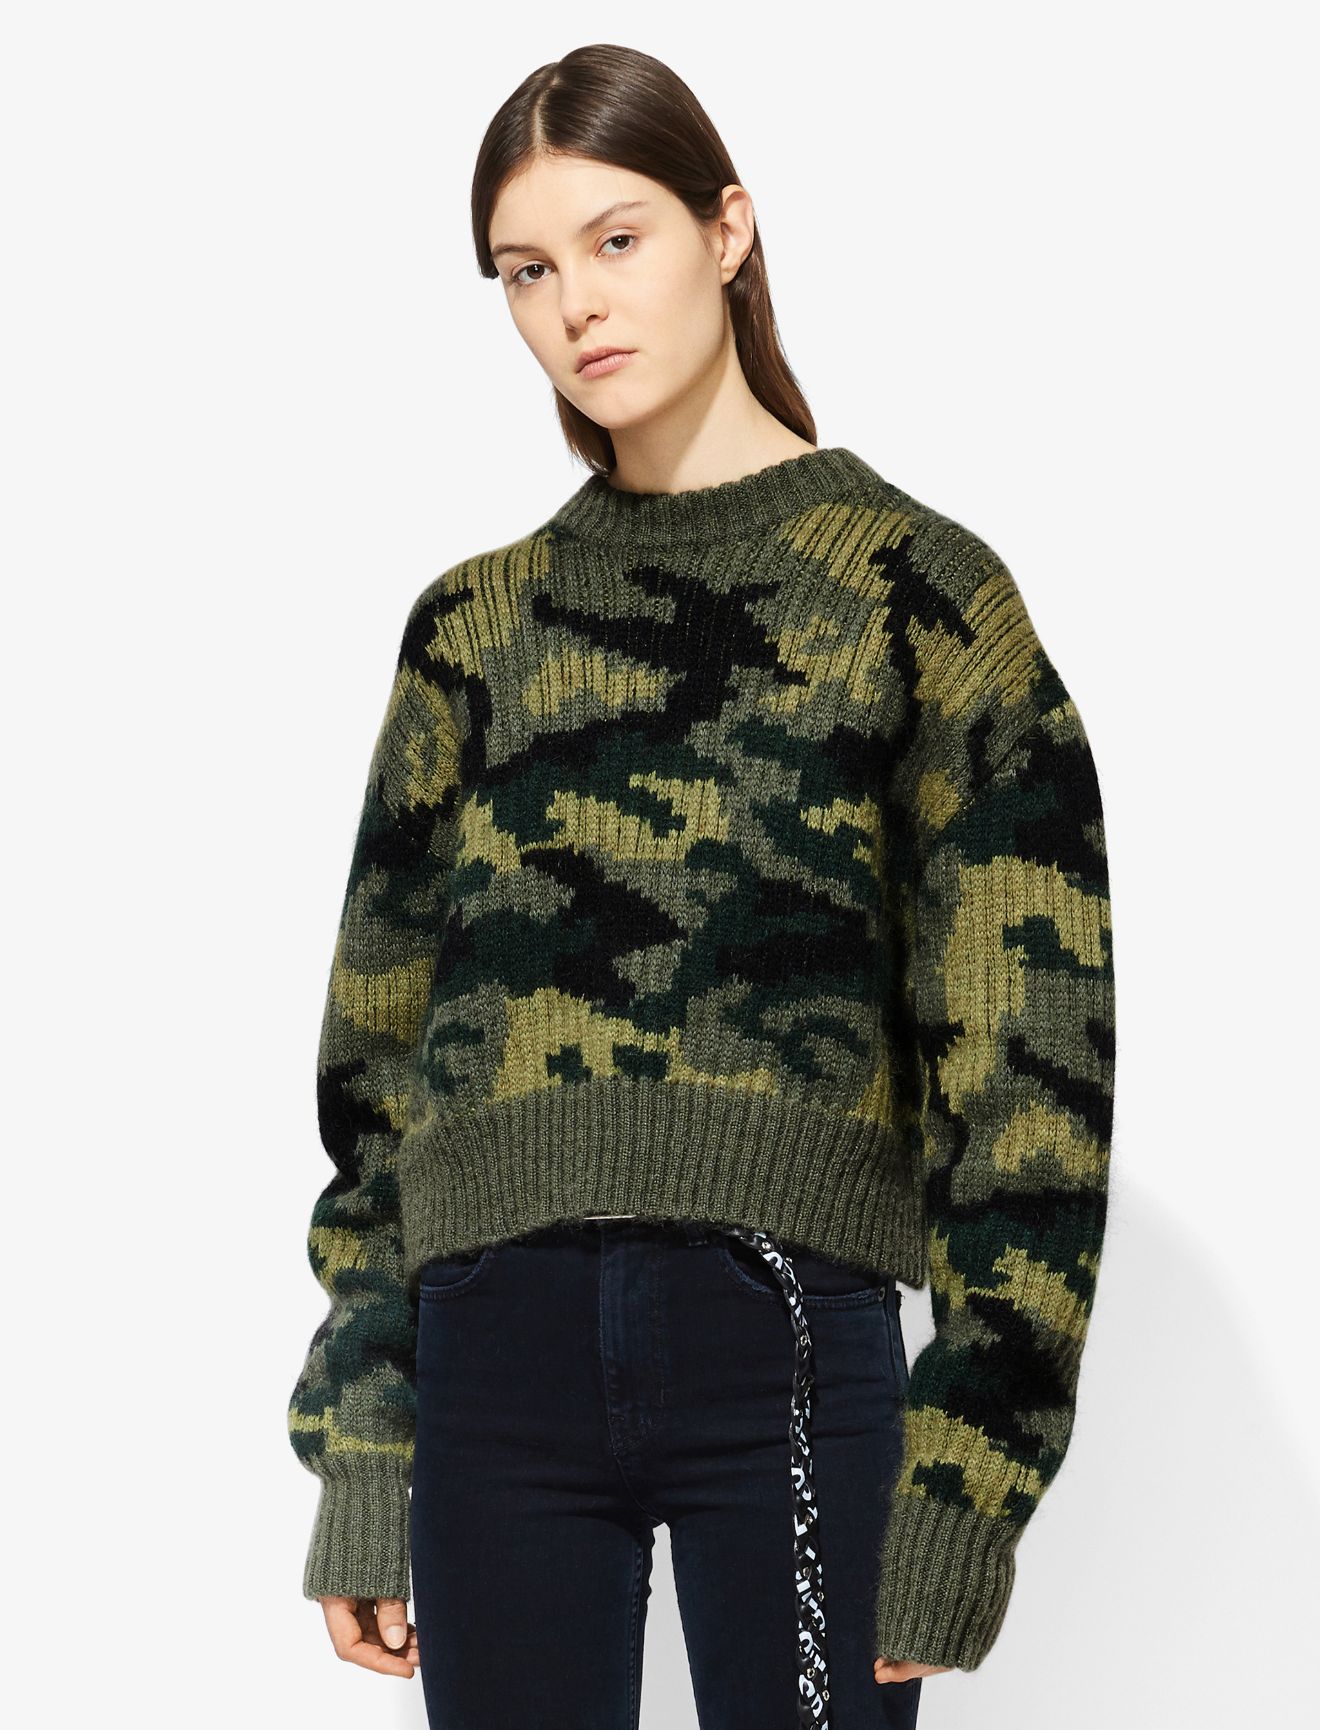 PSWL Camo Jacquard Sweater in green | Proenza Schouler